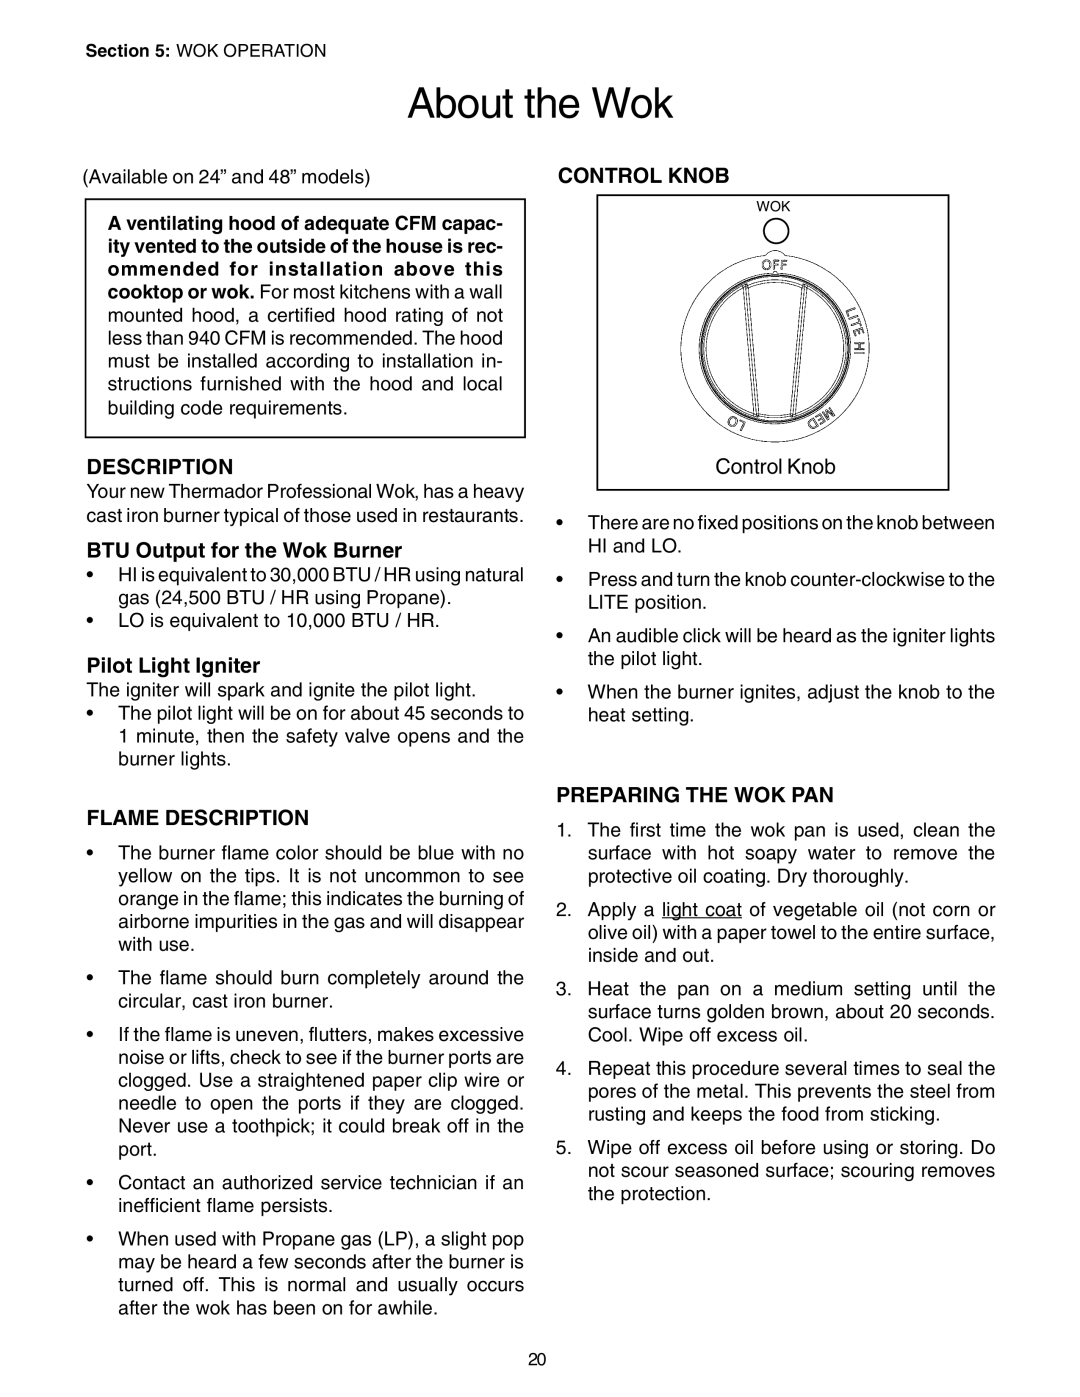 Thermador PC30, P24GE About the Wok, Description, BTU Output for the Wok Burner, Pilot Light Igniter, Control Knob 